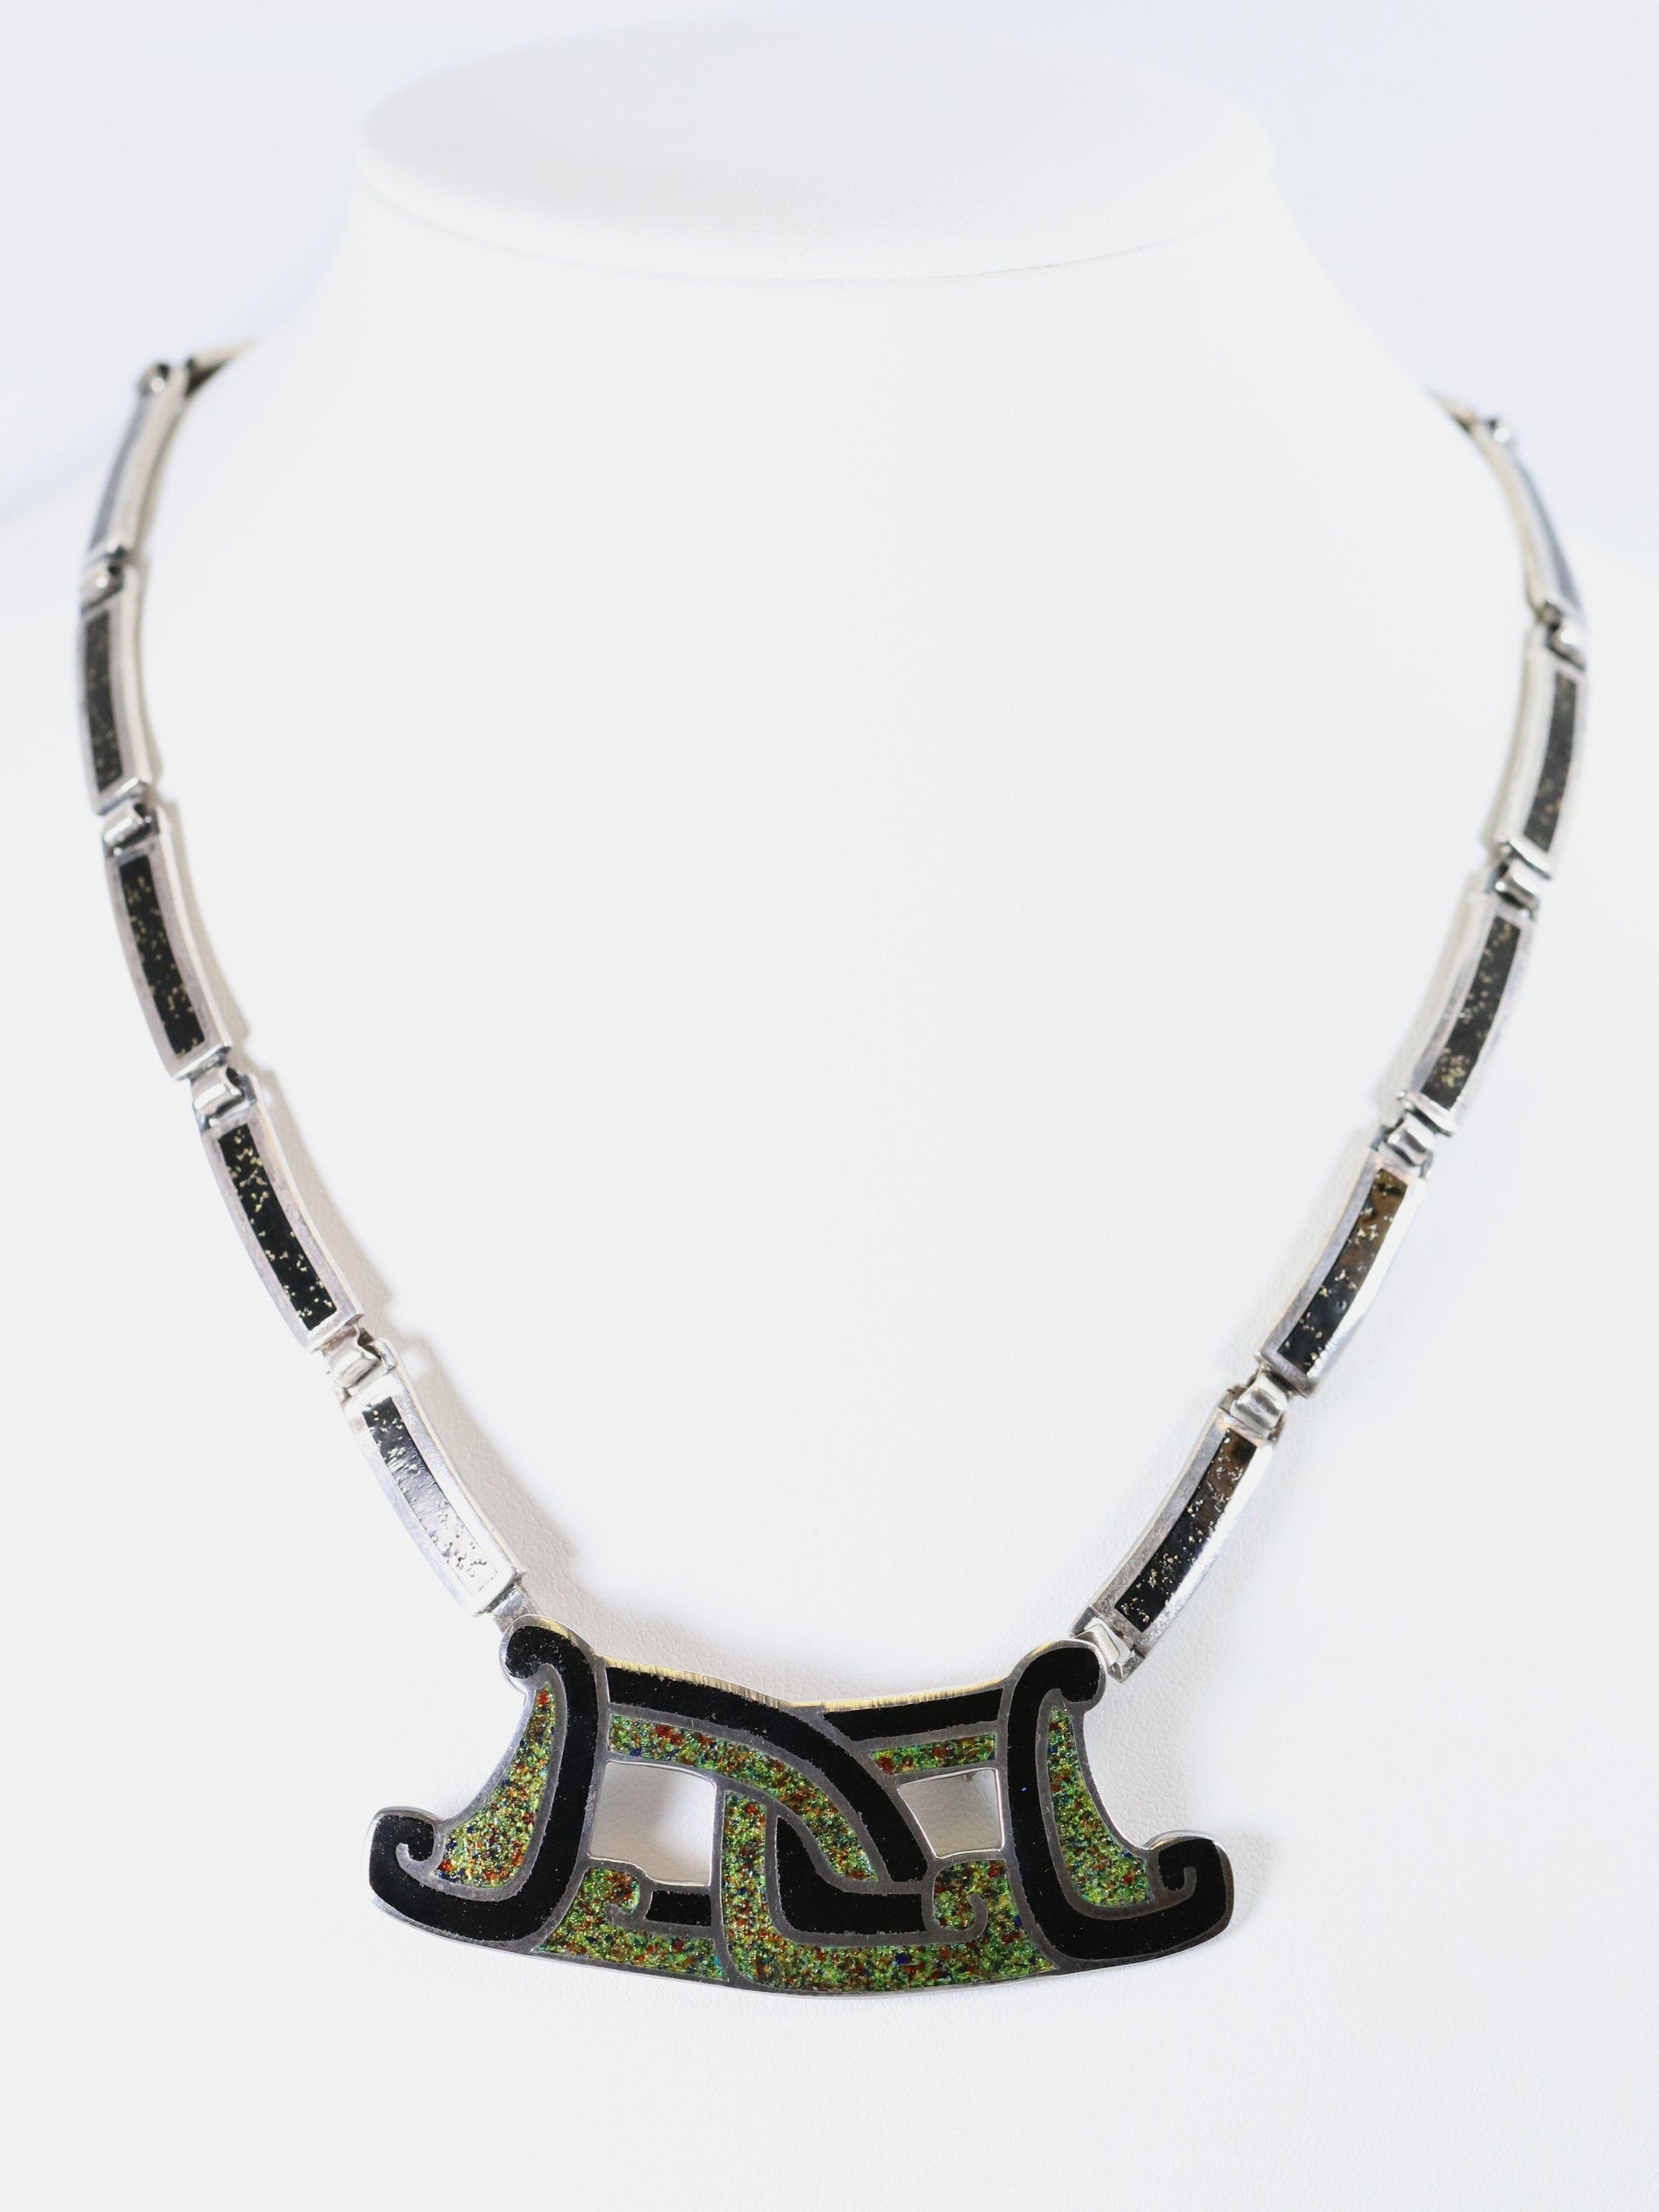  S925 Silver Necklace for Women, Vintage Enamel Color